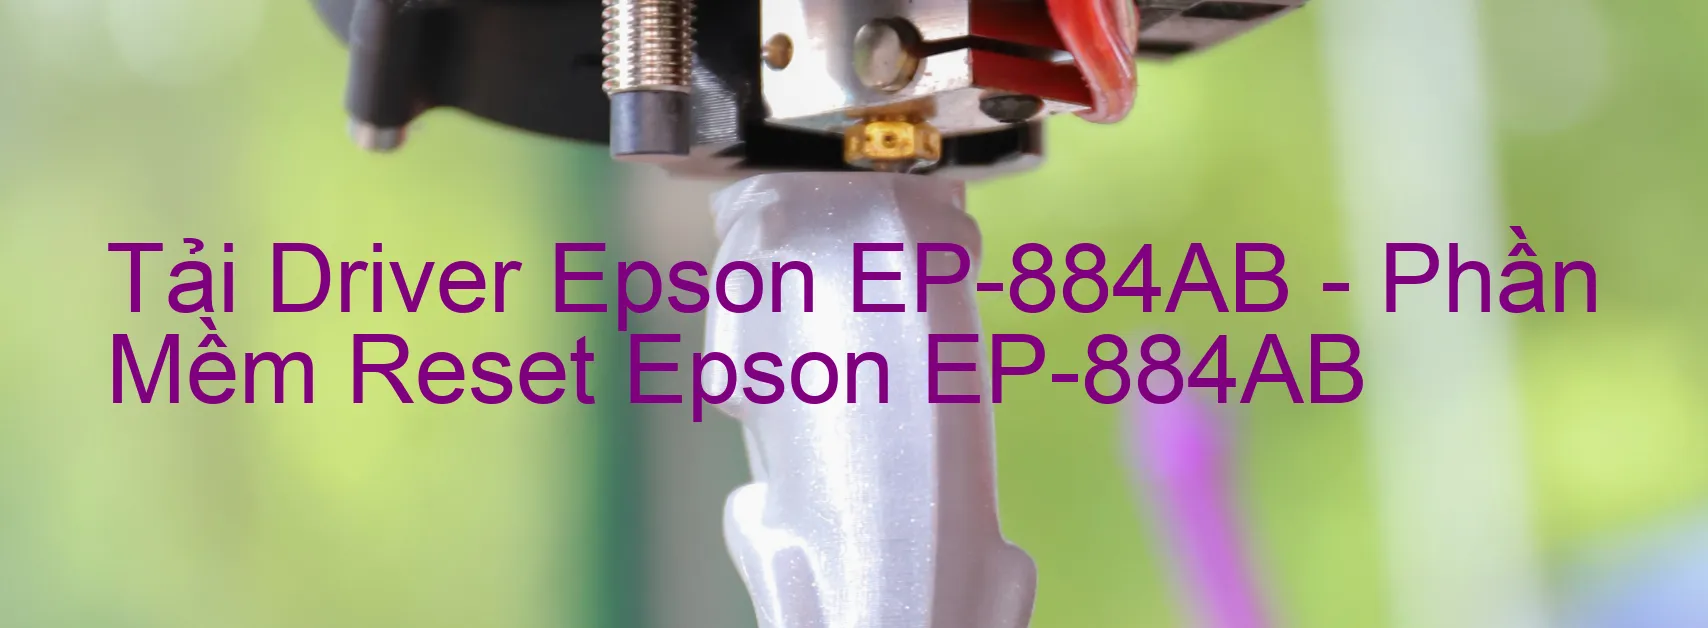 Driver Epson EP-884AB, Phần Mềm Reset Epson EP-884AB